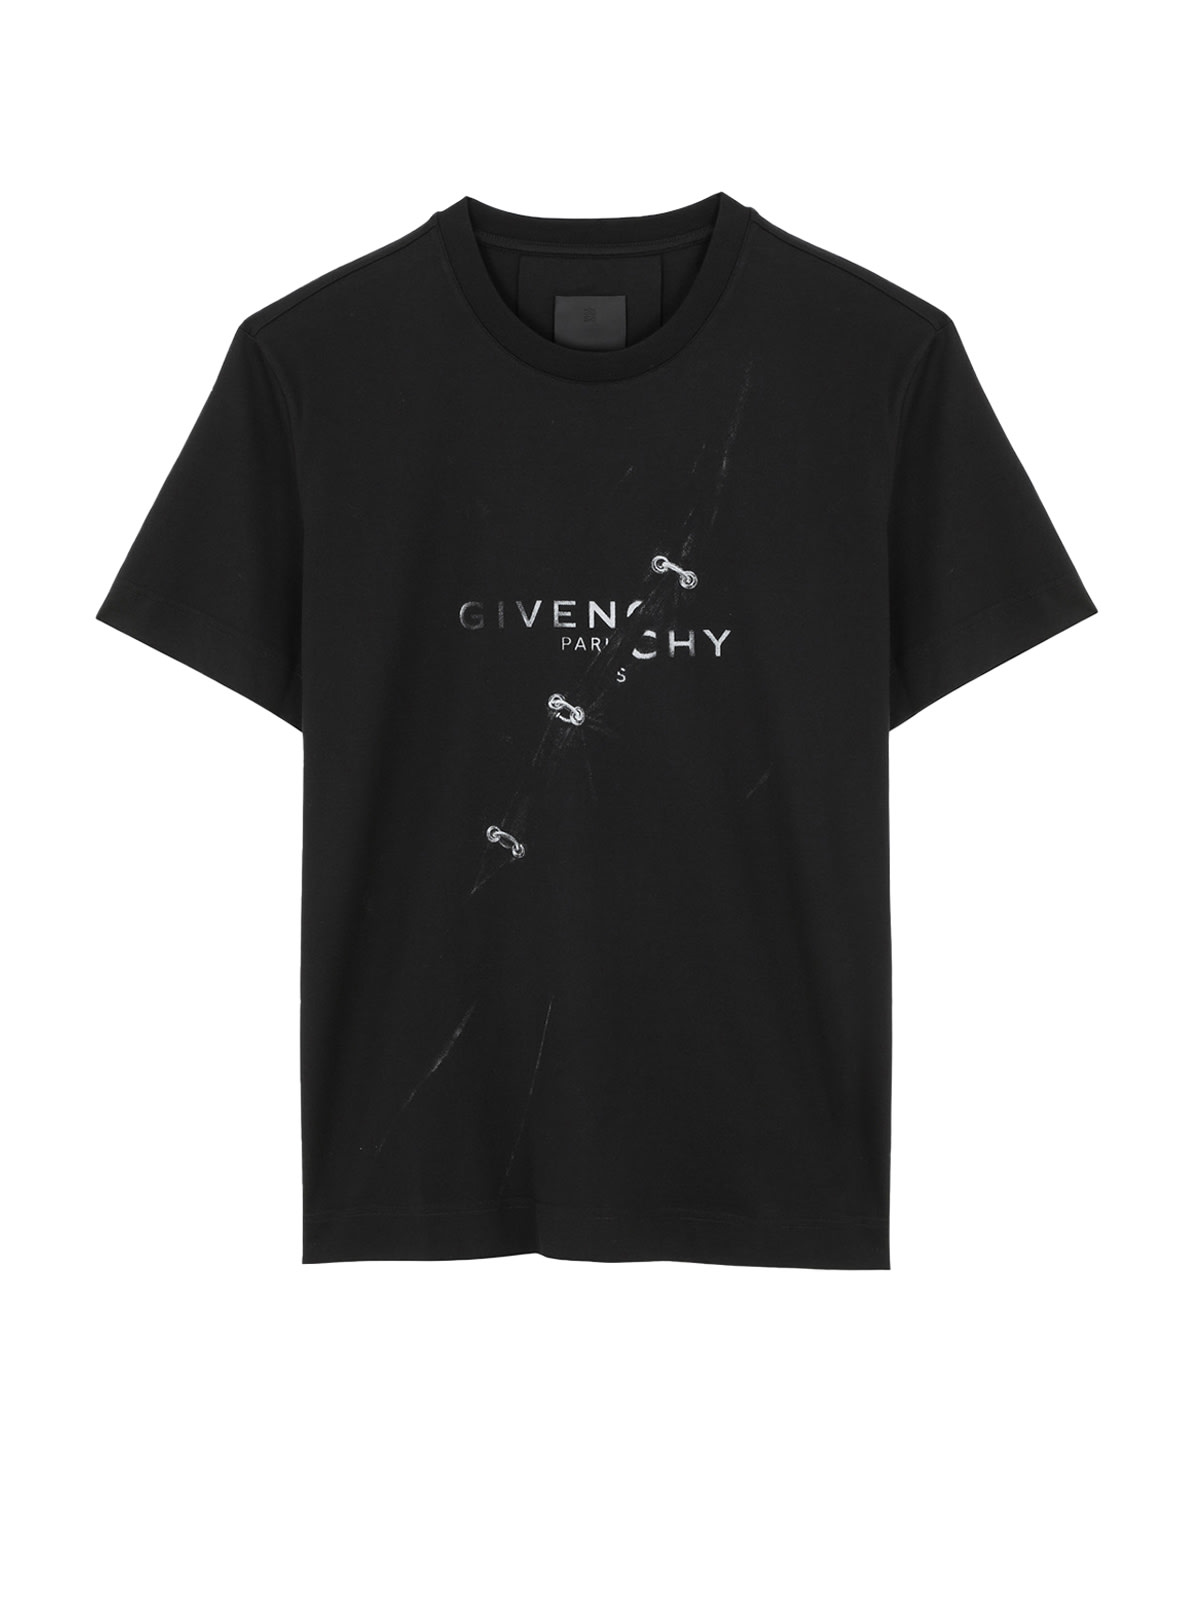 Givenchy Trompeloeil Slimfit Tshirt